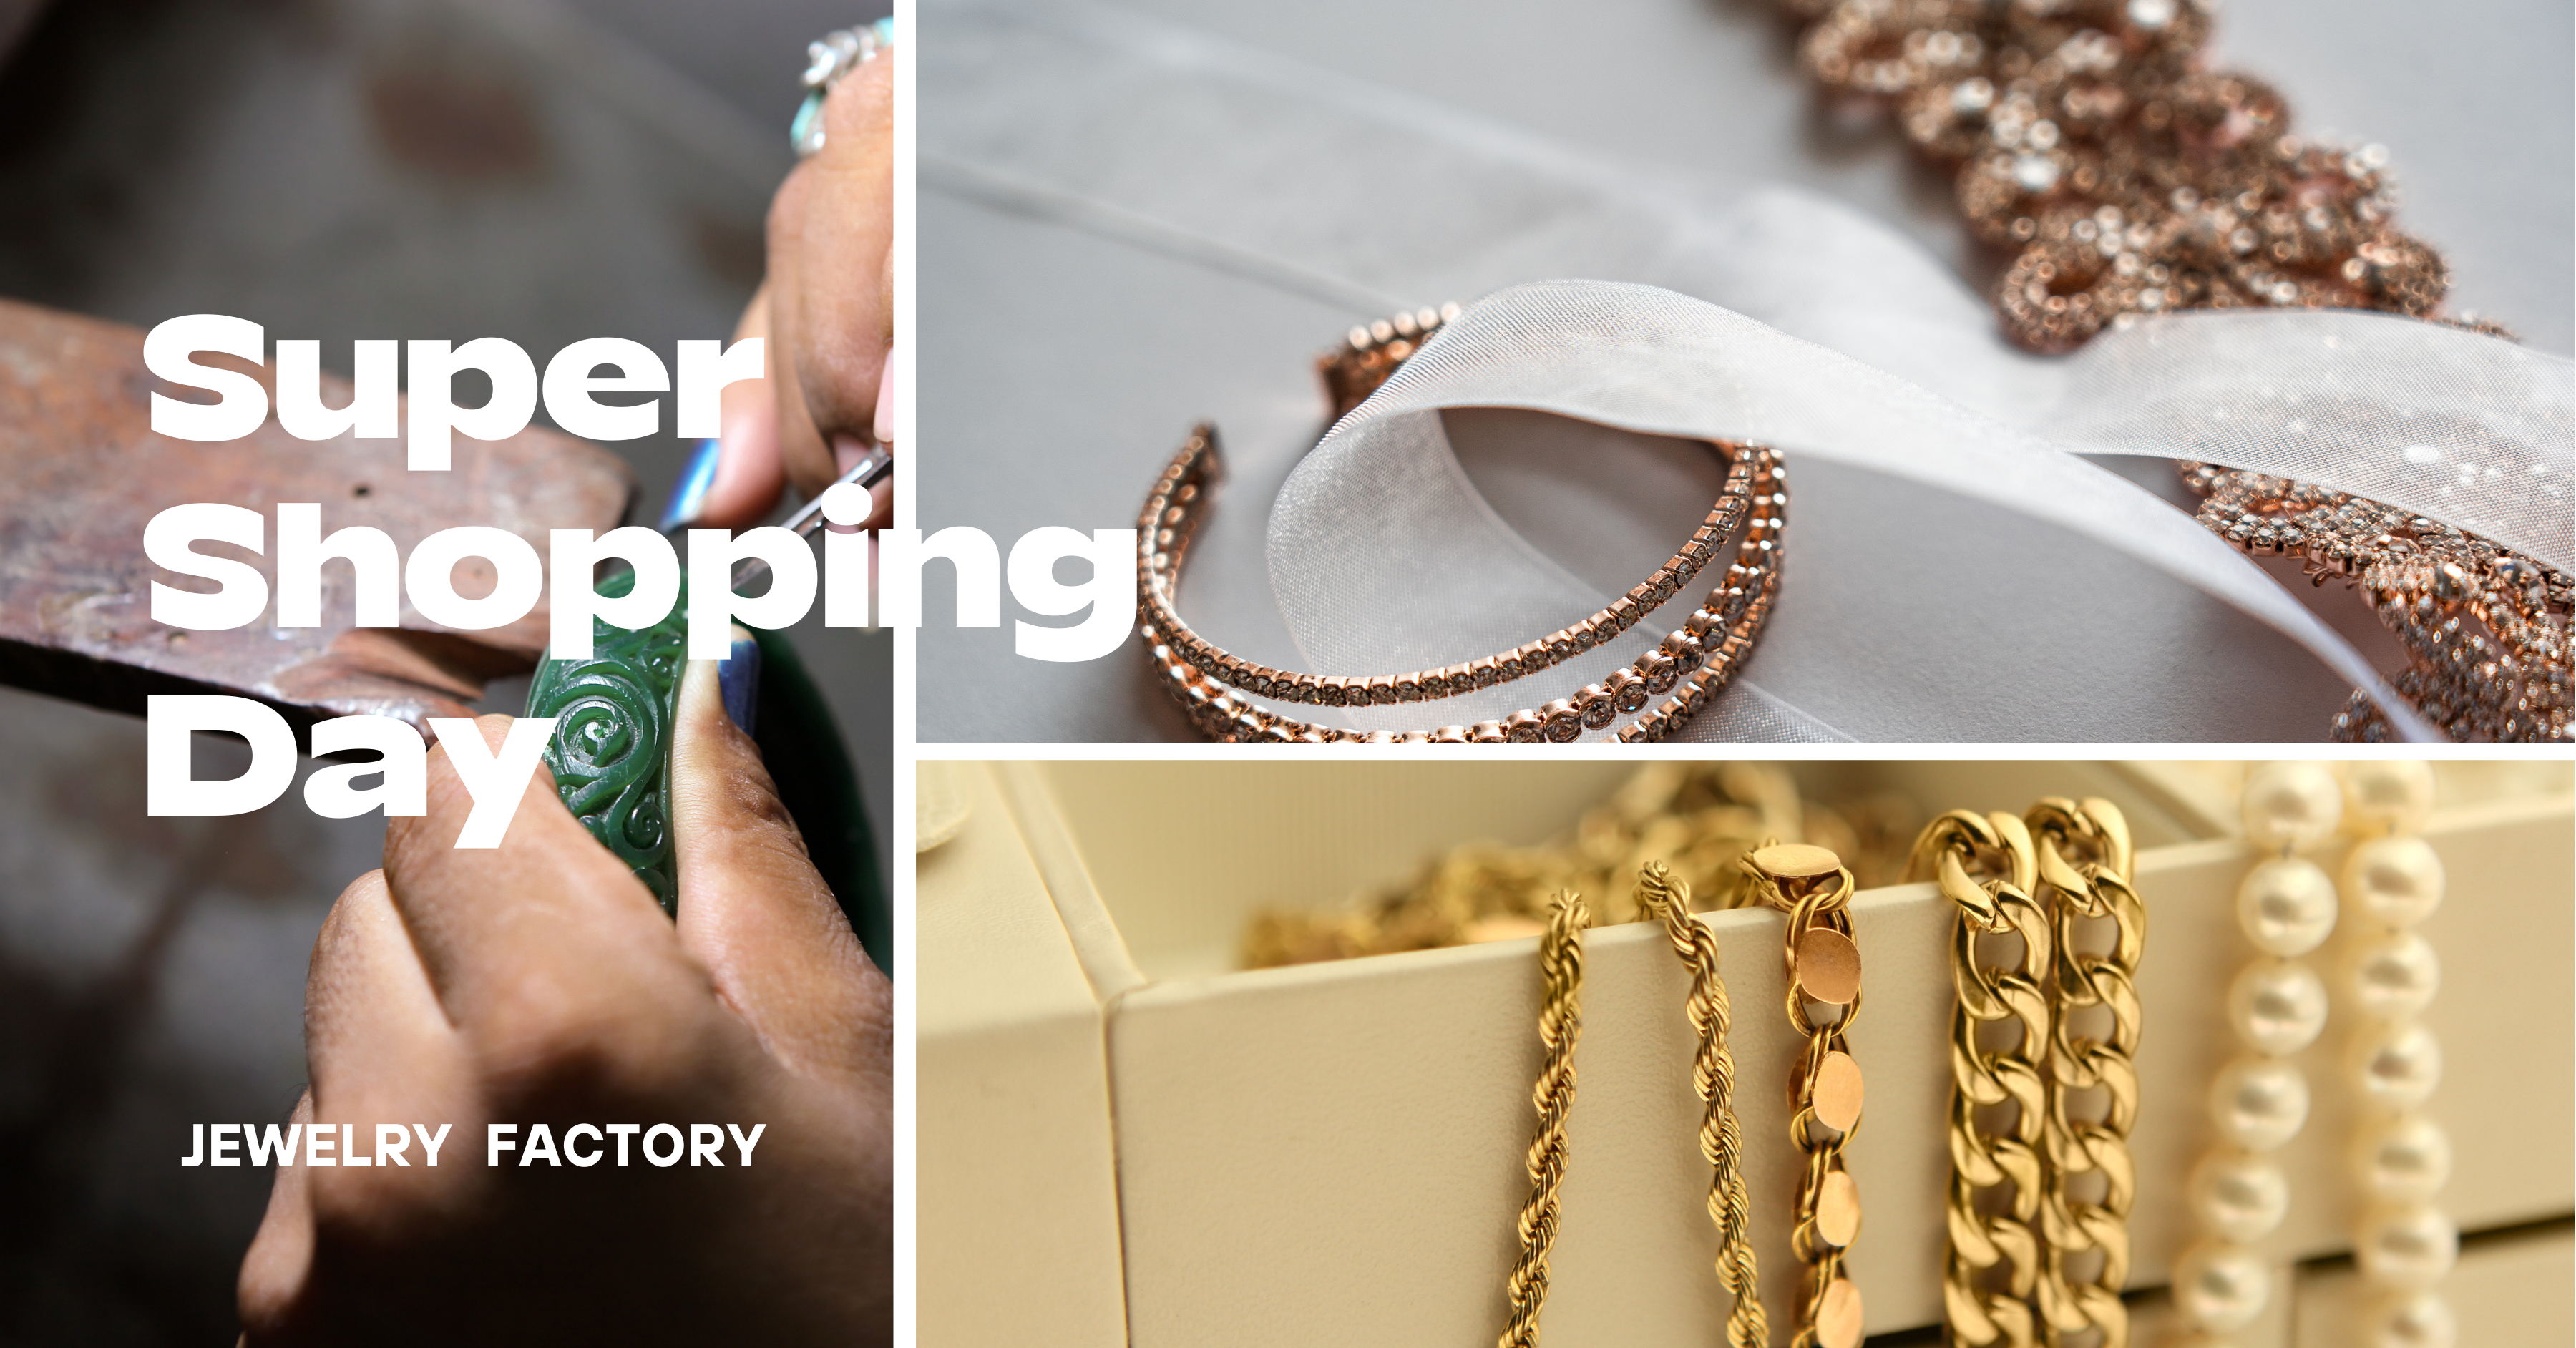 Shopping spree -Jewelry Factory